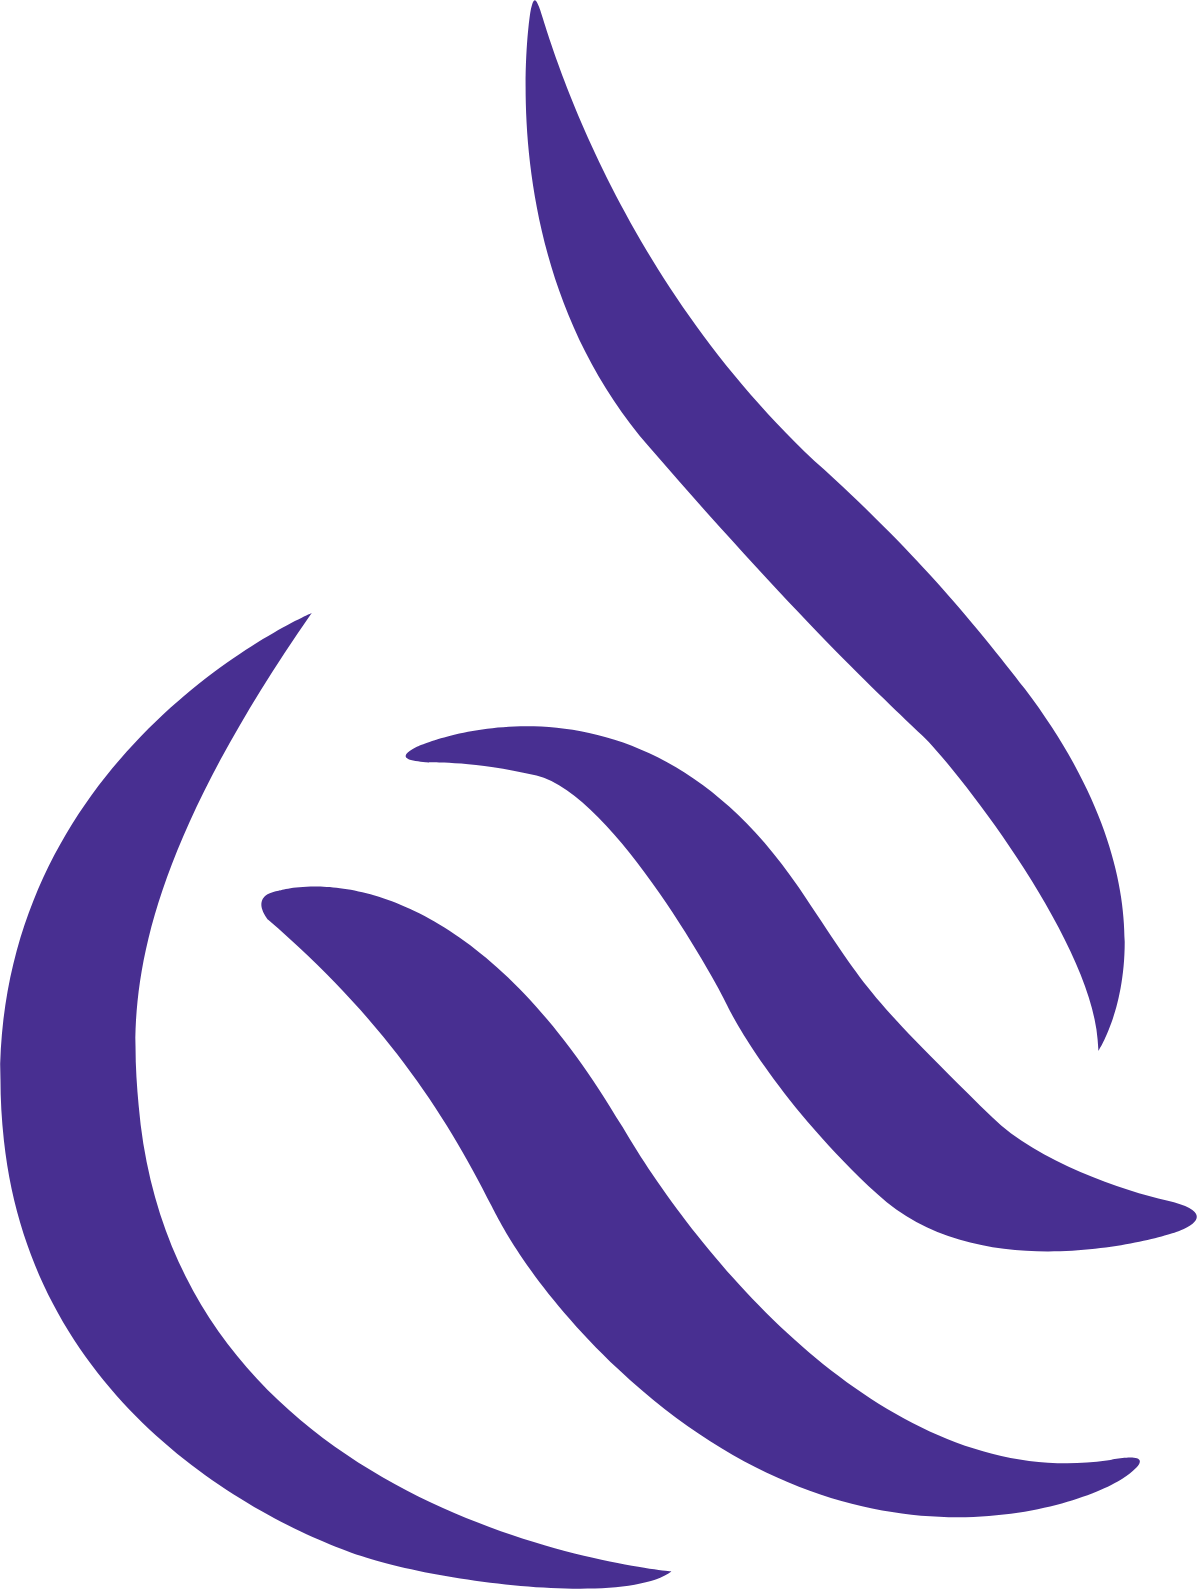 National Petroleum Services Company logo (PNG transparent)